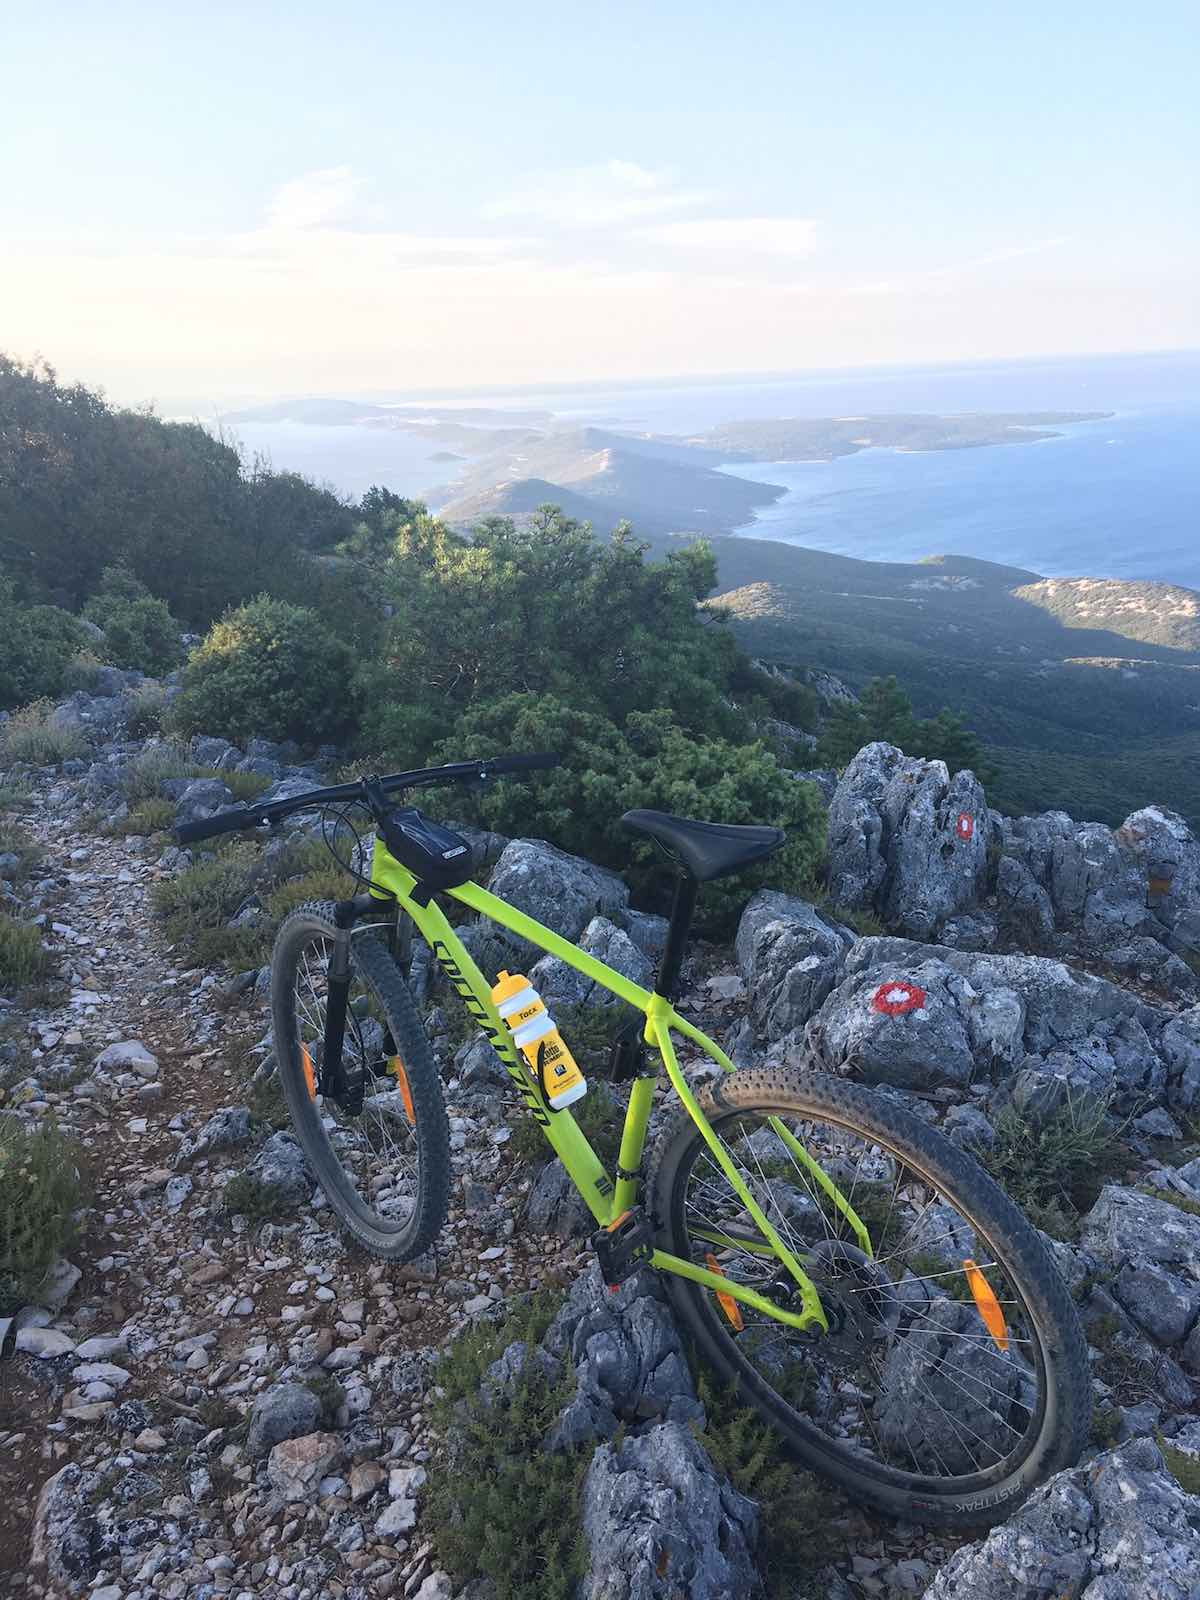 Bikerumor Pic Of The Day: Mali Lošinj, Croatia